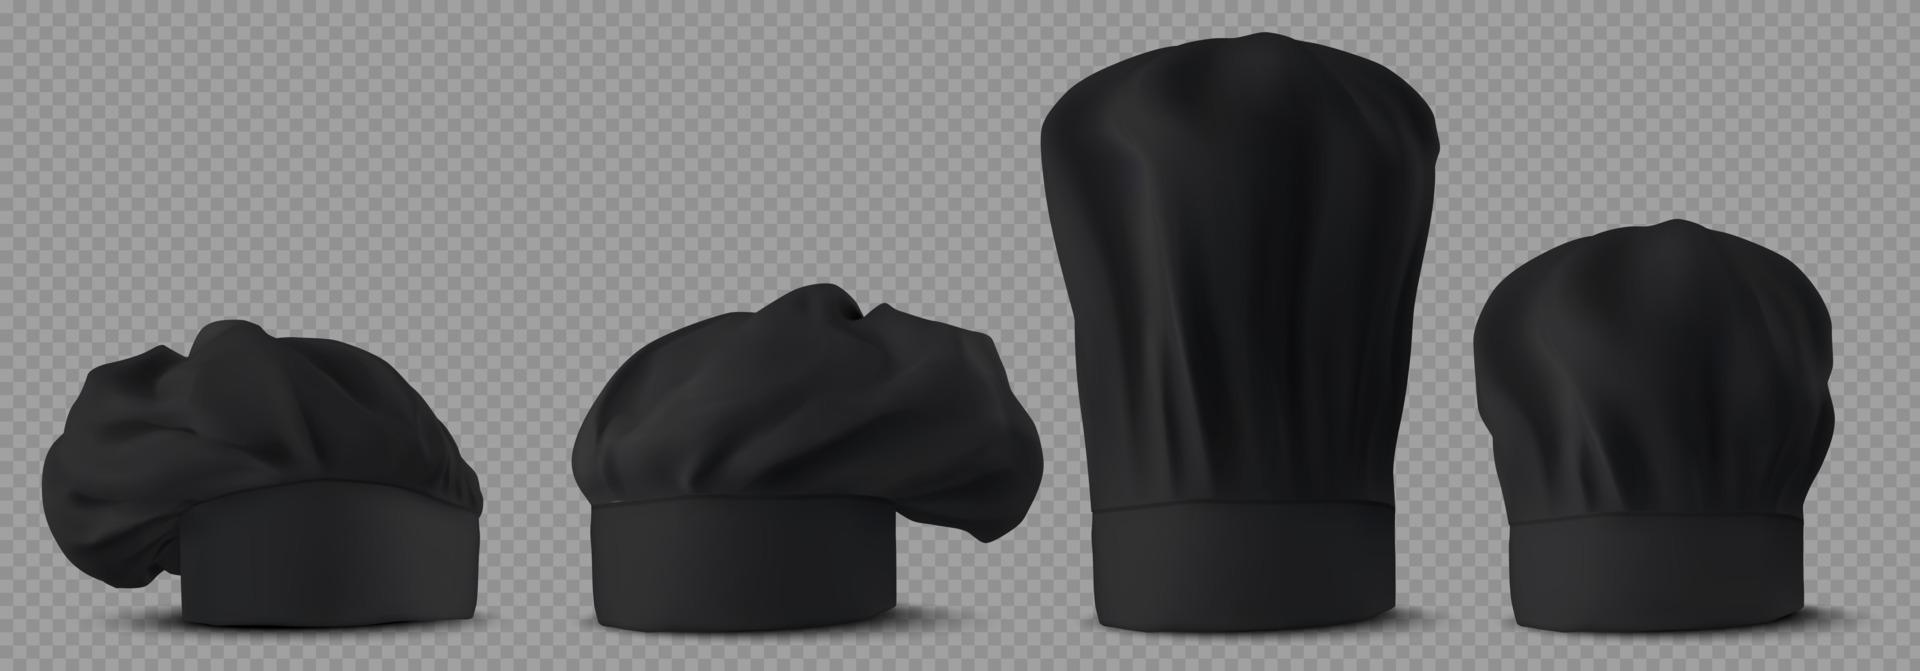 Black chef hats, cooker uniform in cafe kitchen vector